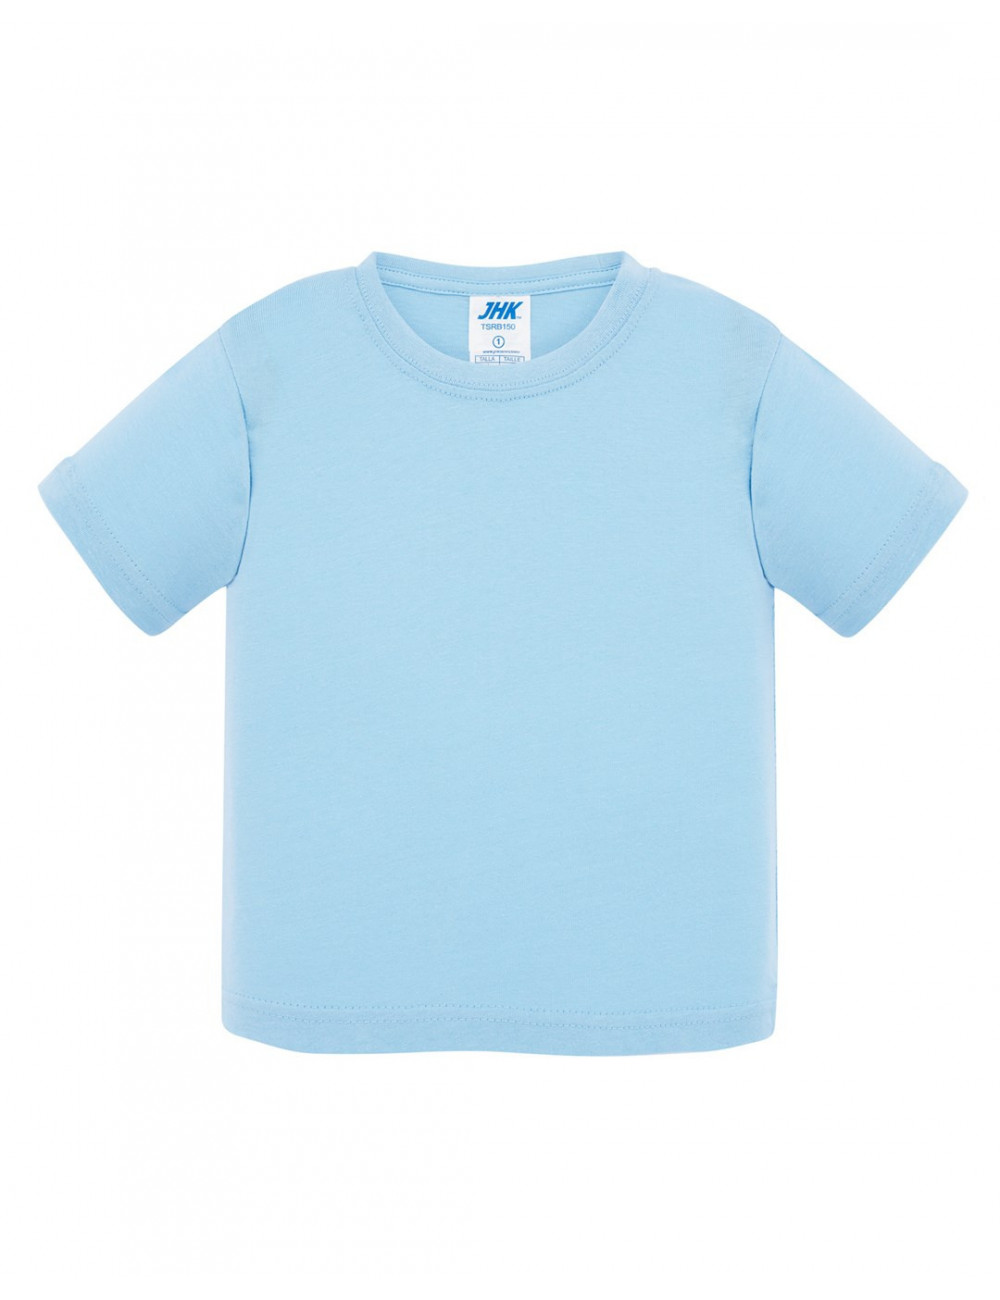 Kinder-T-Shirt Tsrb 150 babyblauer Himmel Jhk